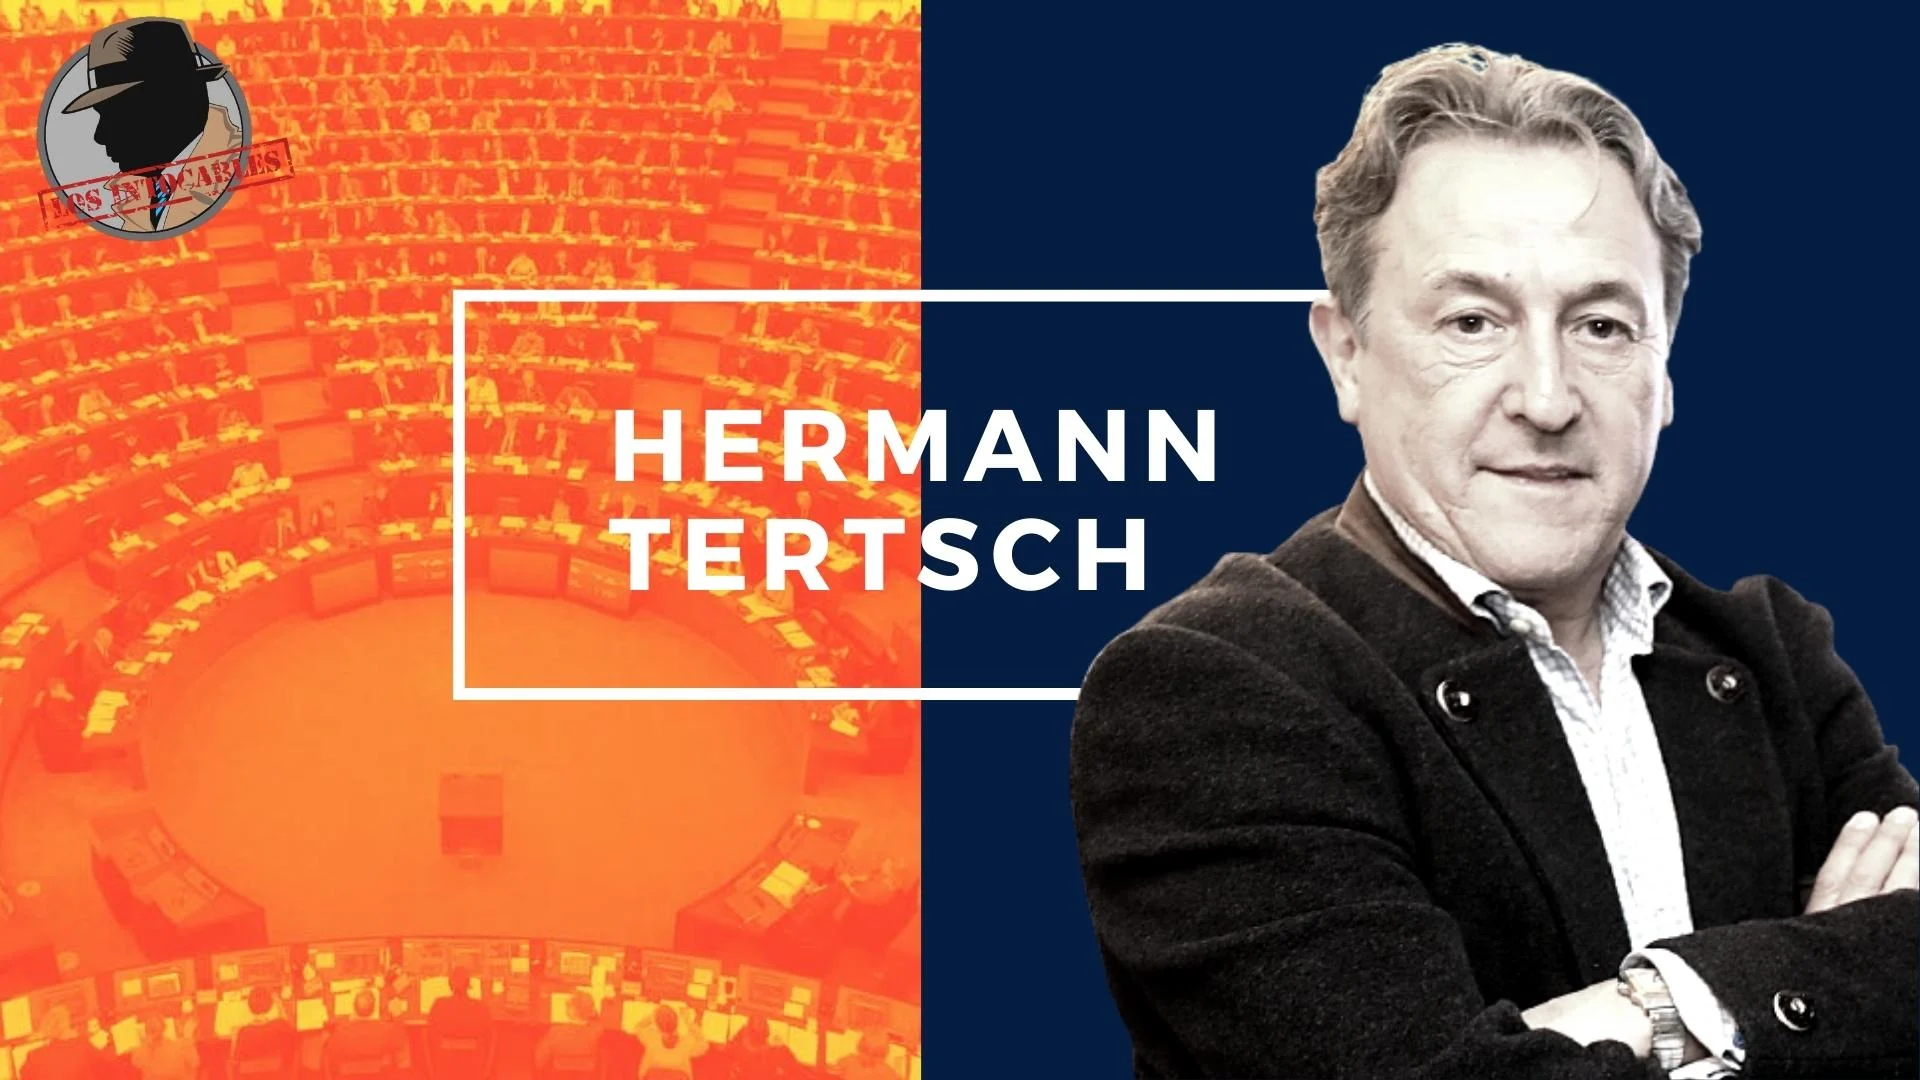 HERMANN TERTSCH RESPONDE A CRITICAS TRAS SU POLÉMICA INTERVENCIÓN EN LA EUROCÁMARA